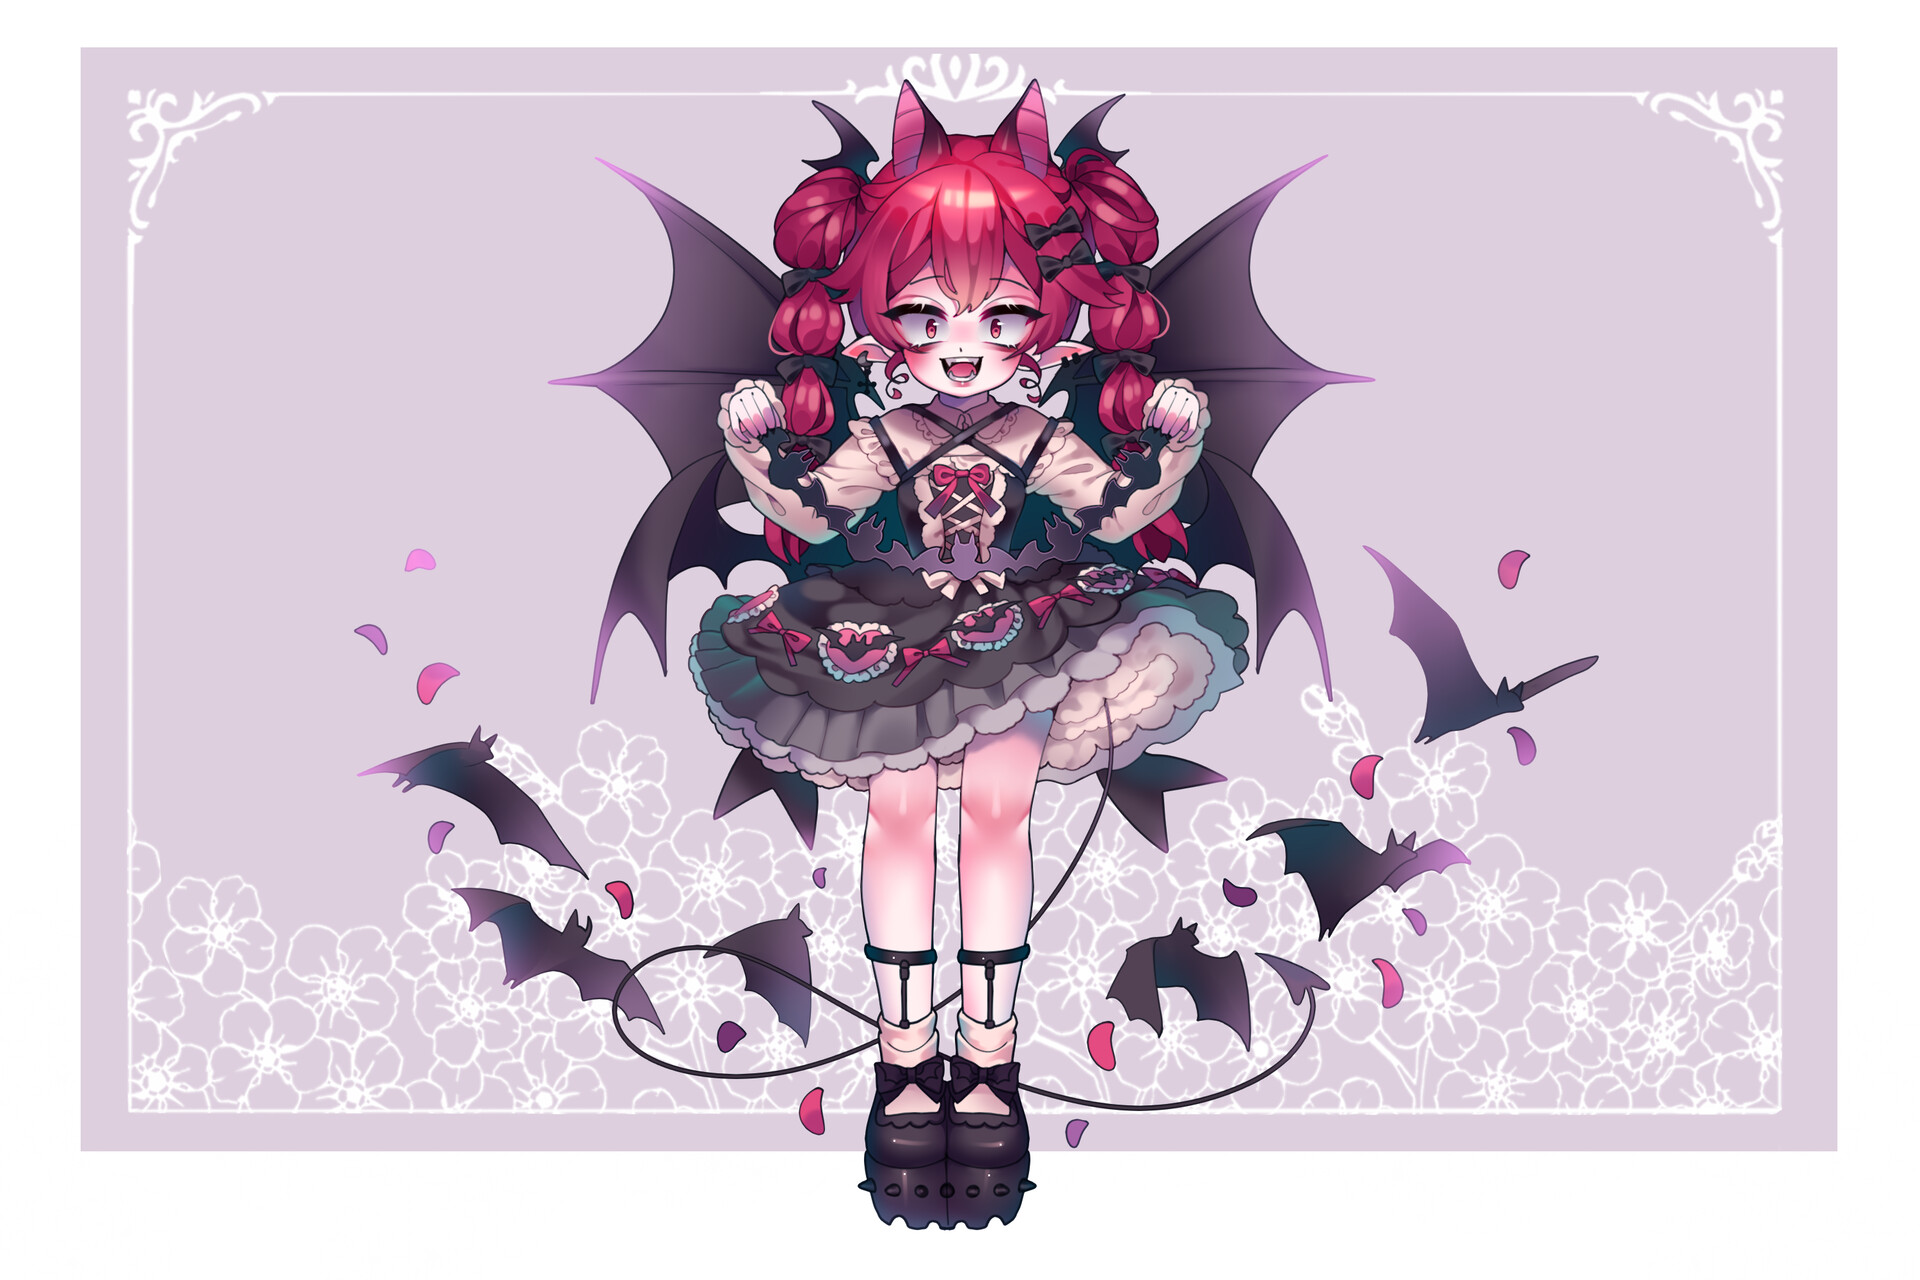 cute preppy anime girl with bat wings, anime pfp, hd